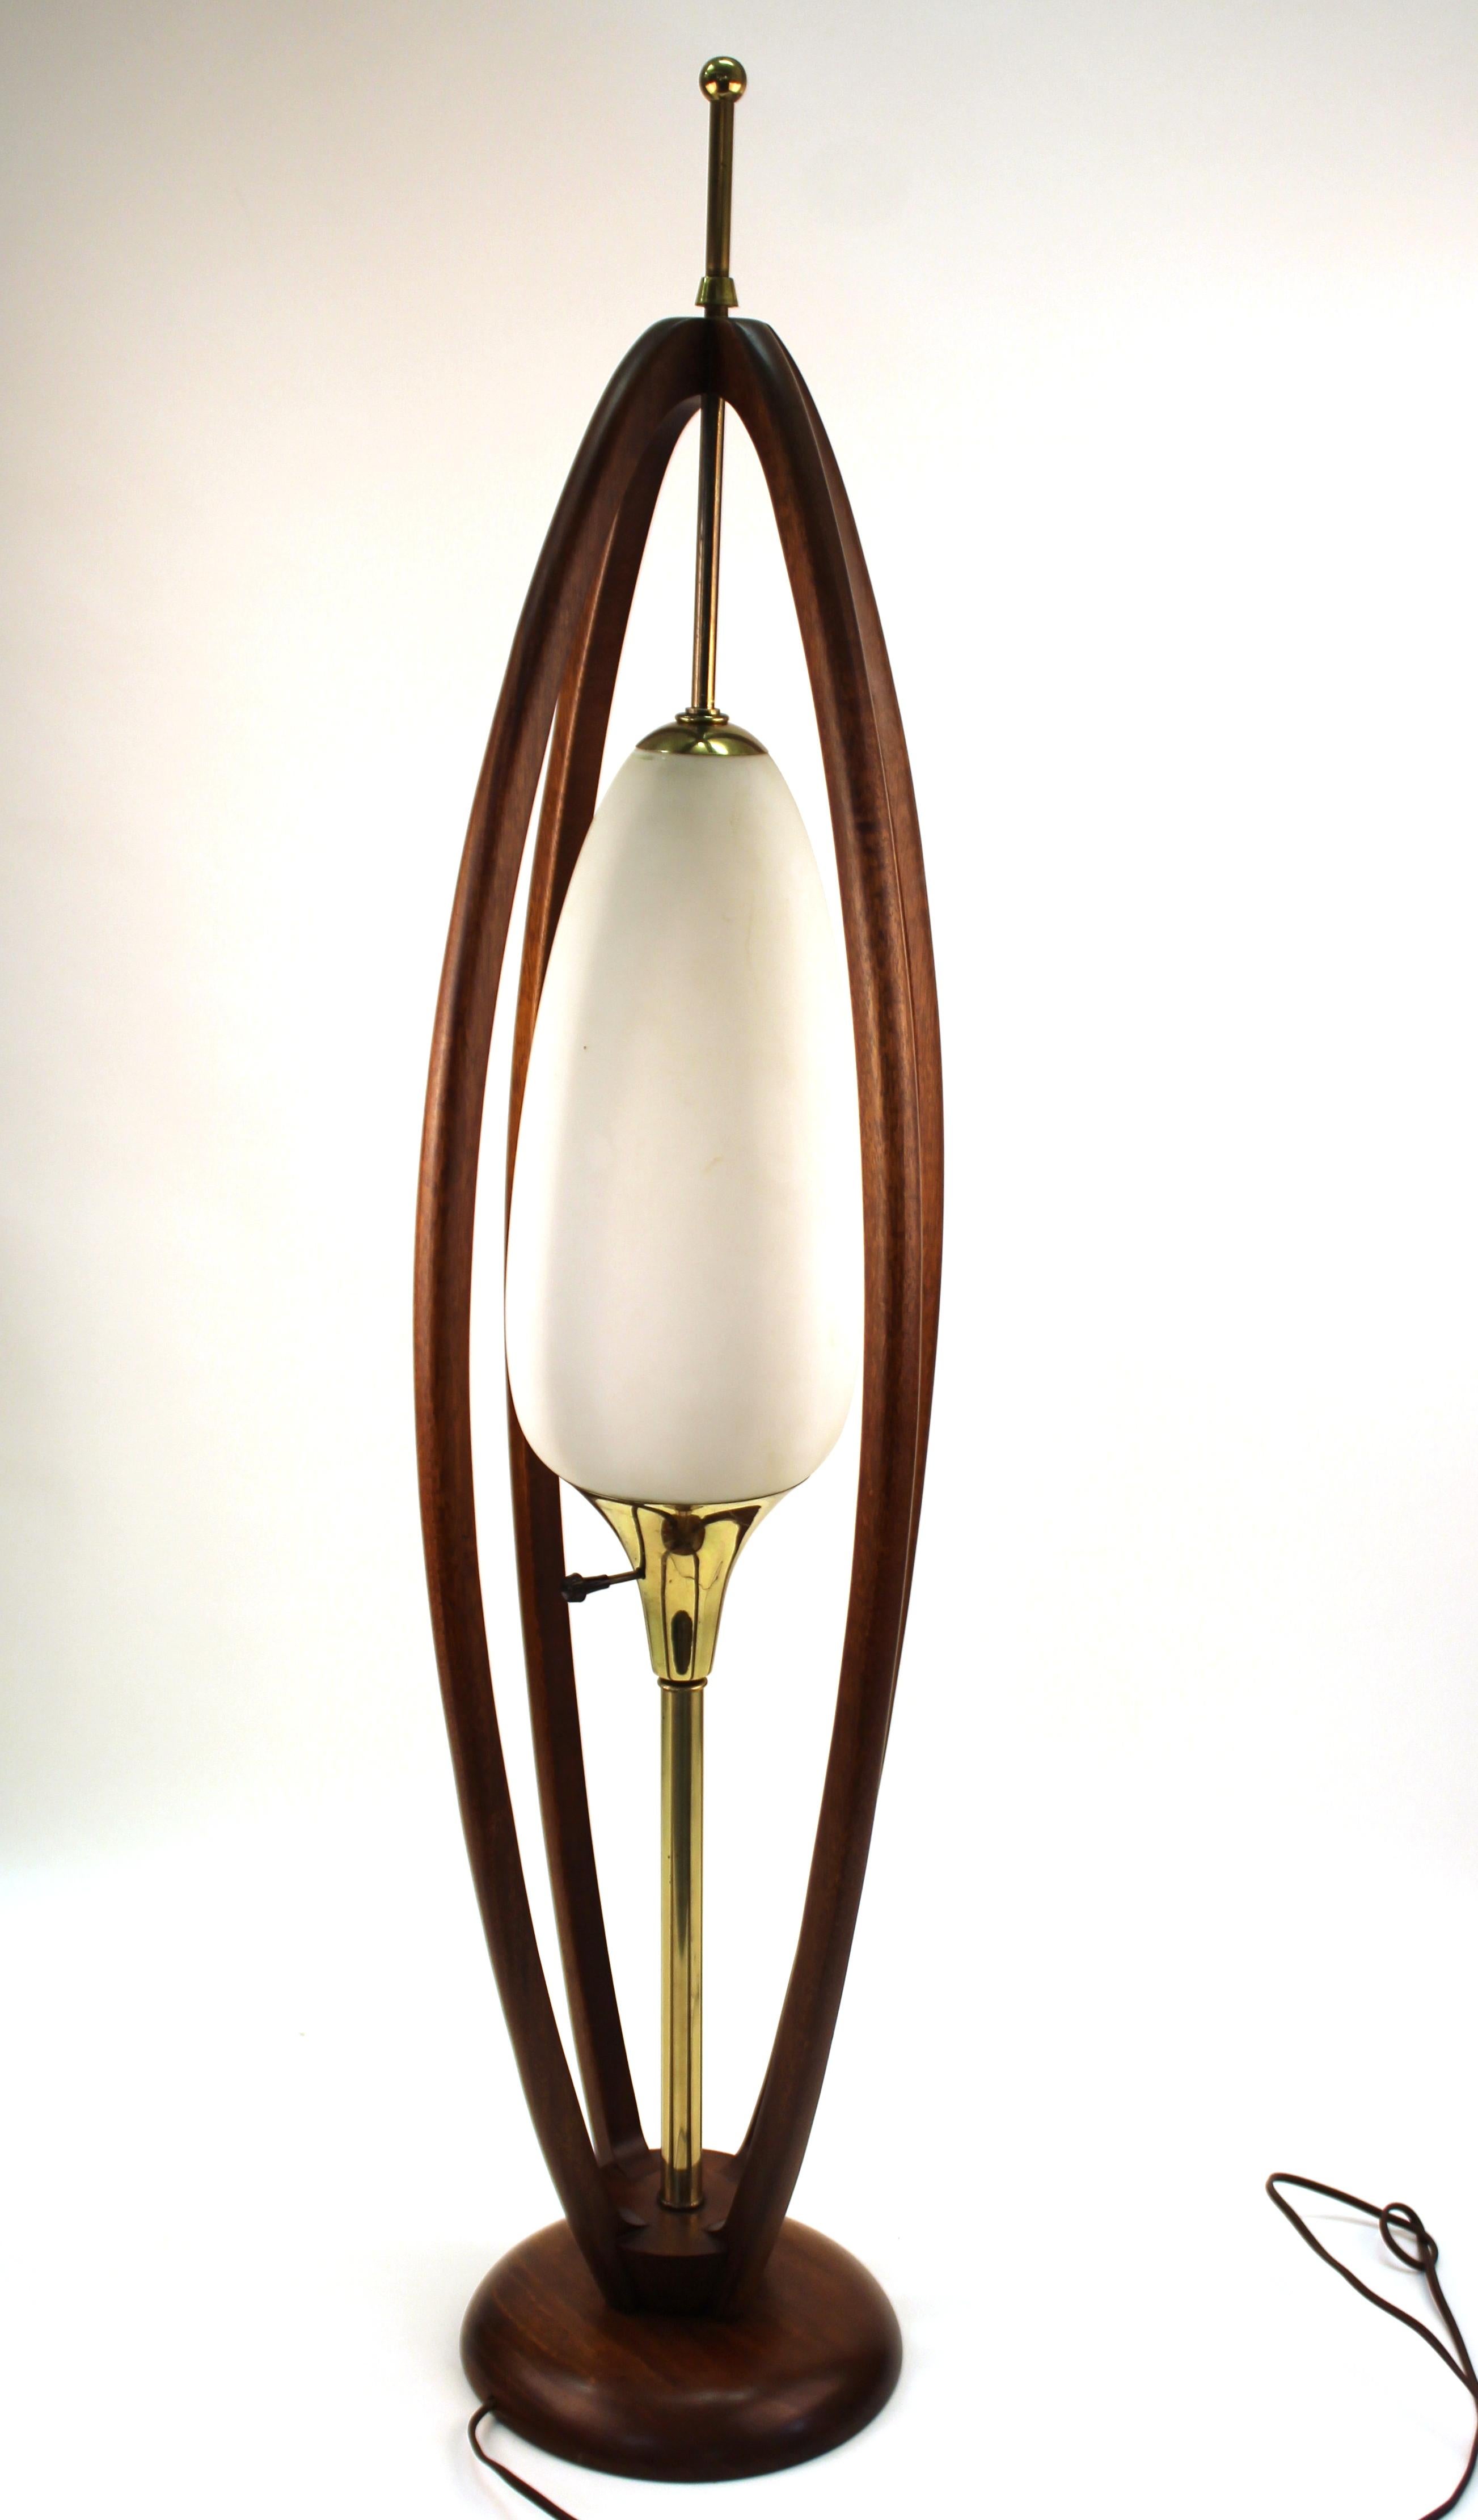 North American Mid-Century Modern Teak Table Lamp In Style of Modeline